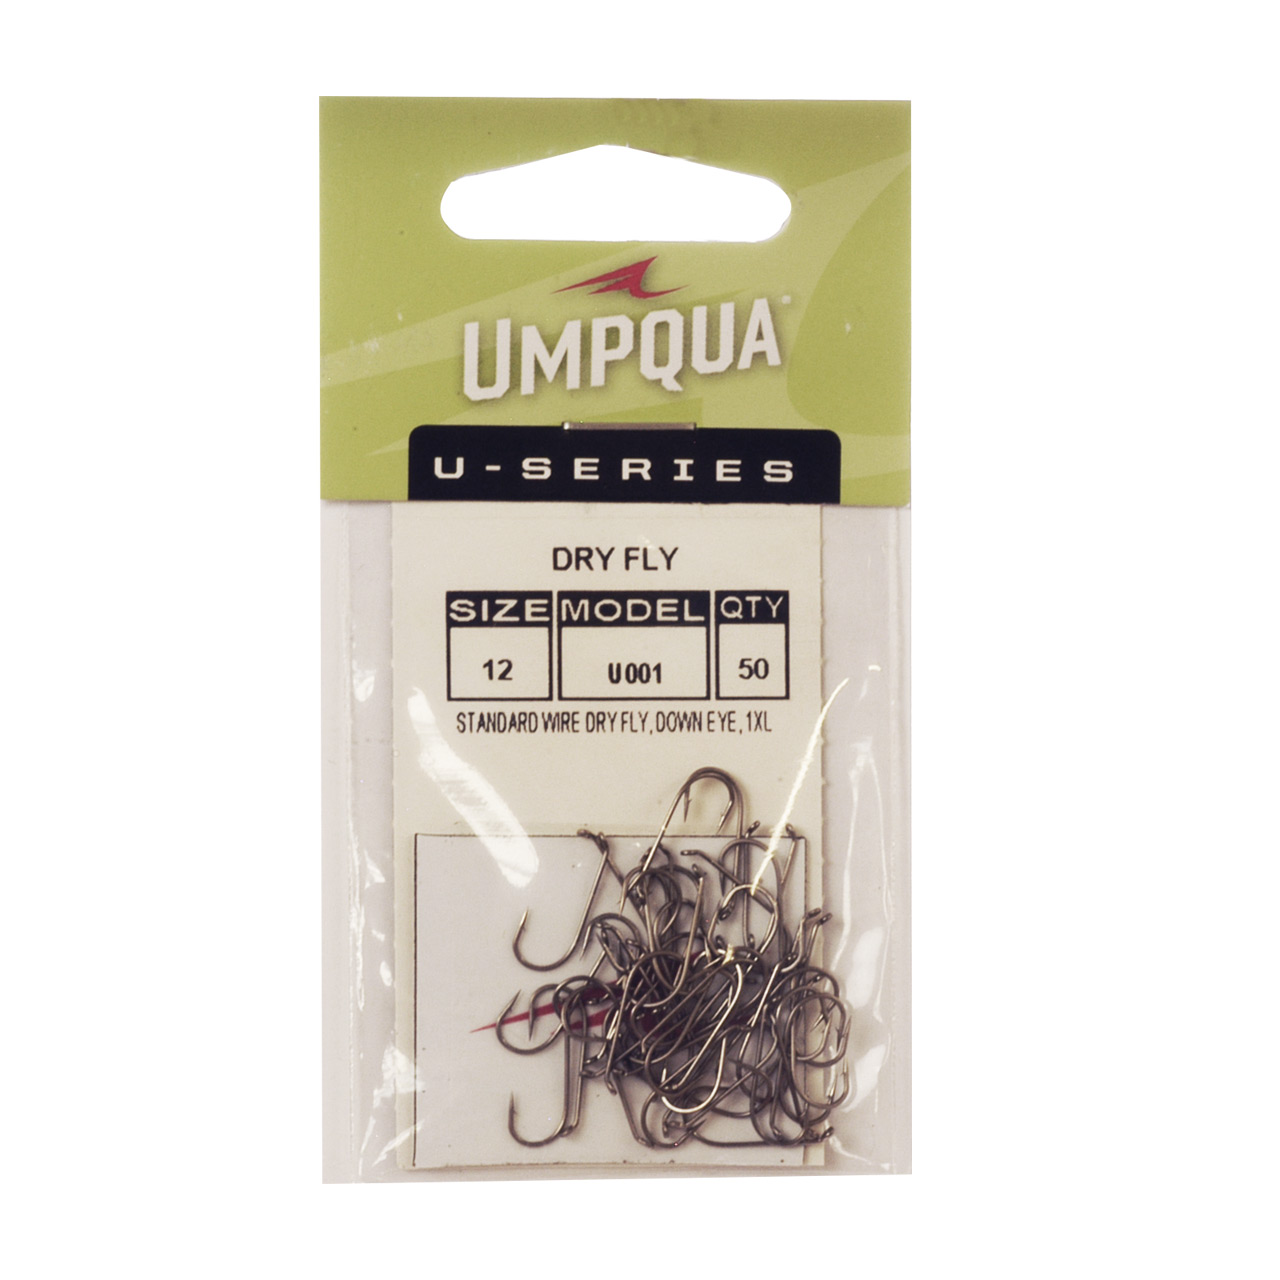 Umpqua U-Series U201 Fly Tying Hooks Product Review Winner